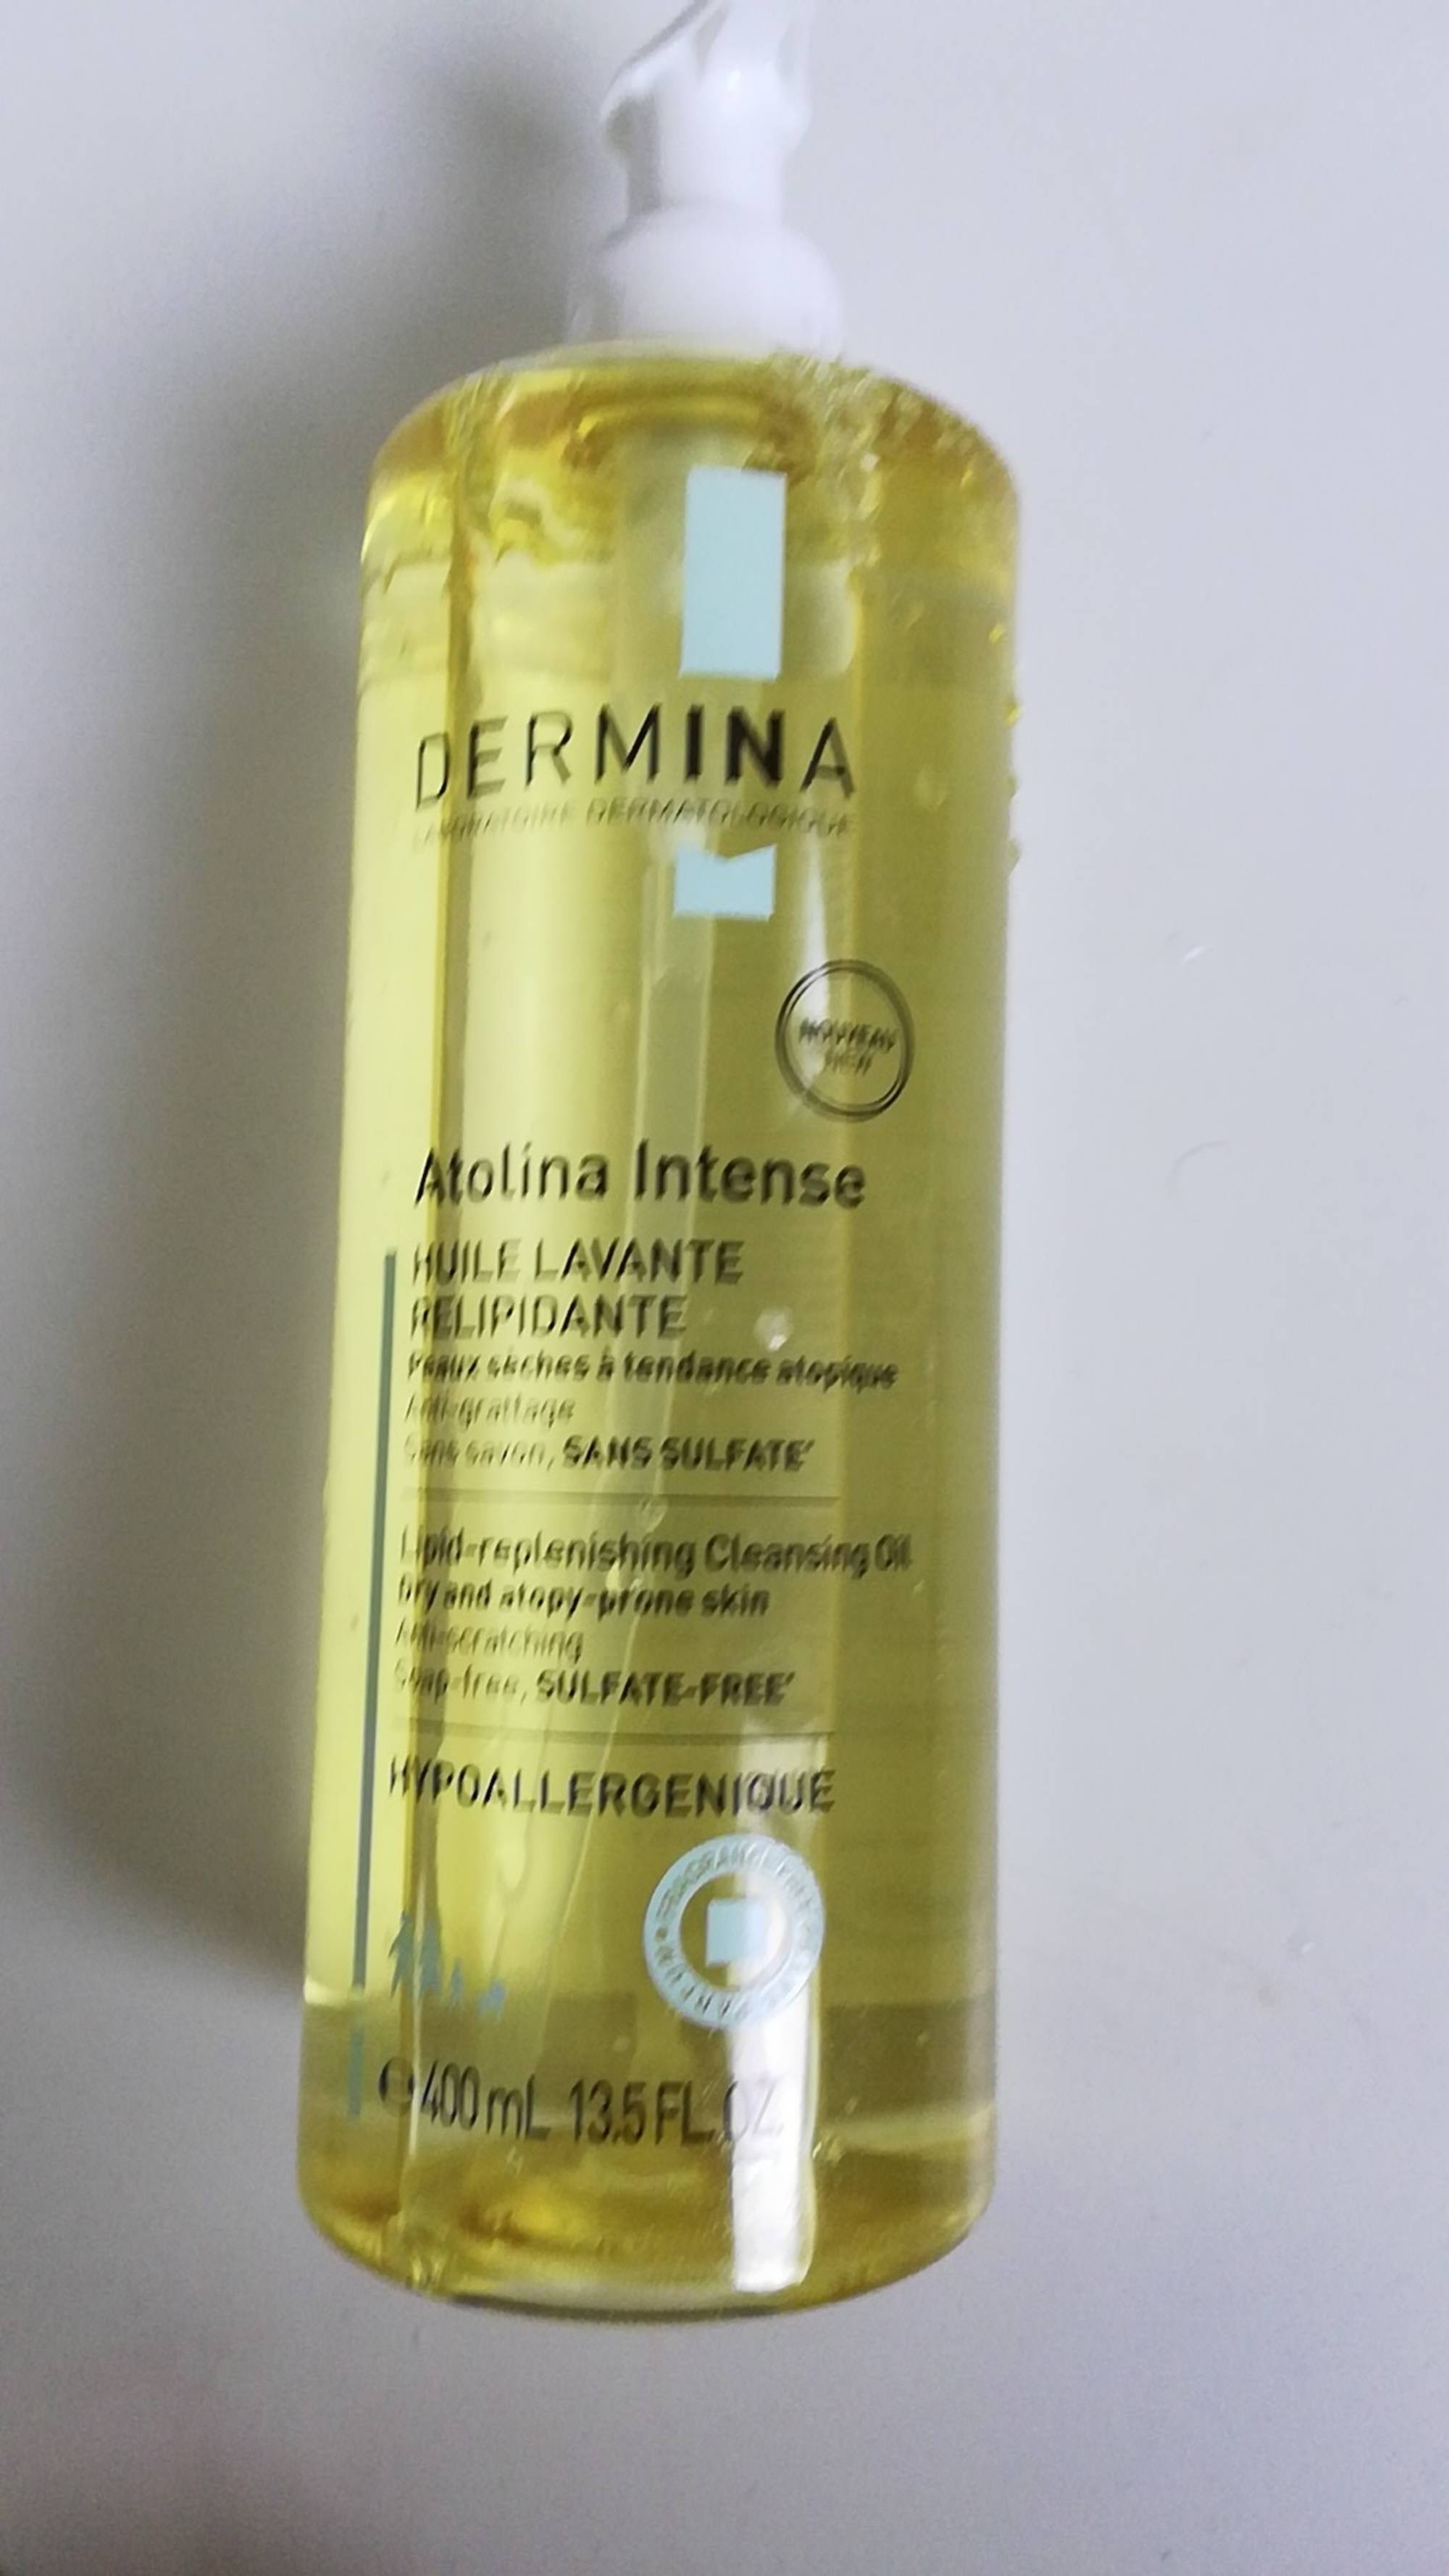 DERMINA - Atolina intense - Huile lavante Relipidante